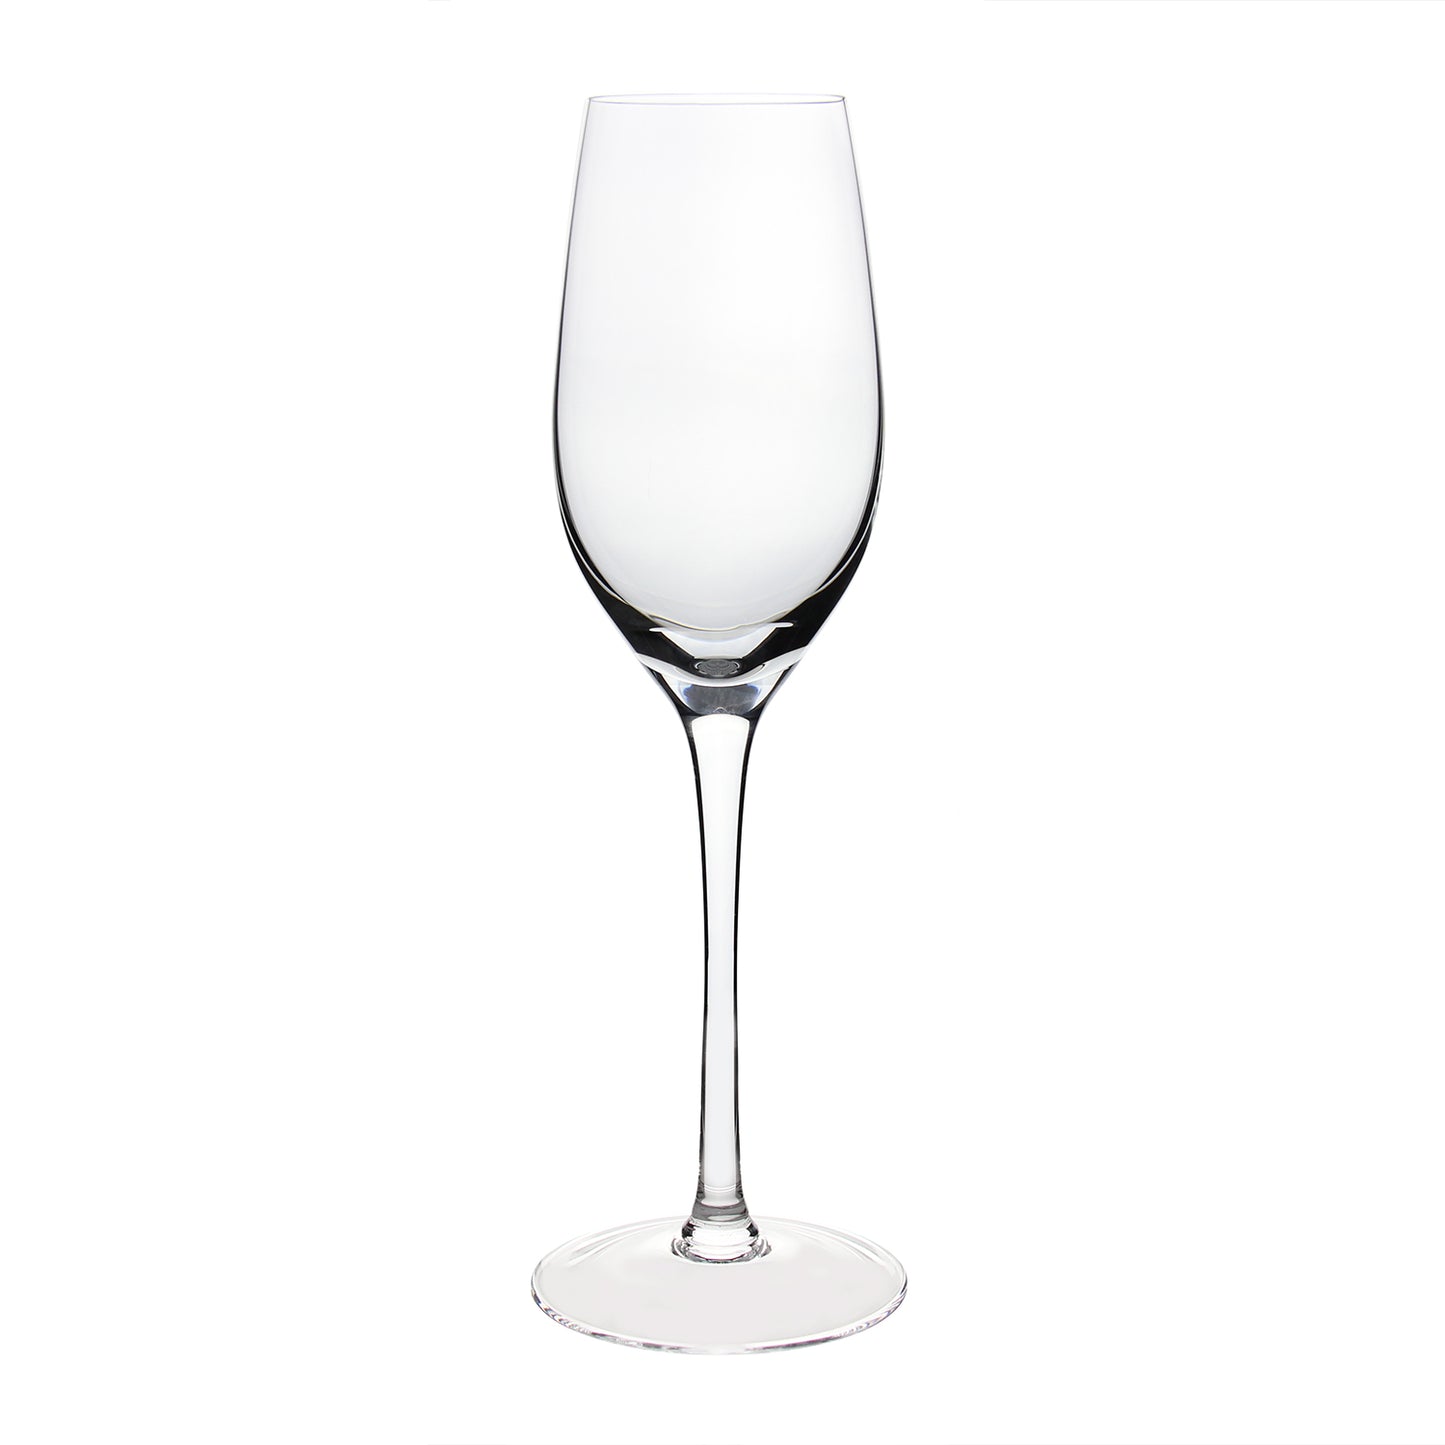 Ravenscroft Classics Sake/Sherry Glass (Set of 4)